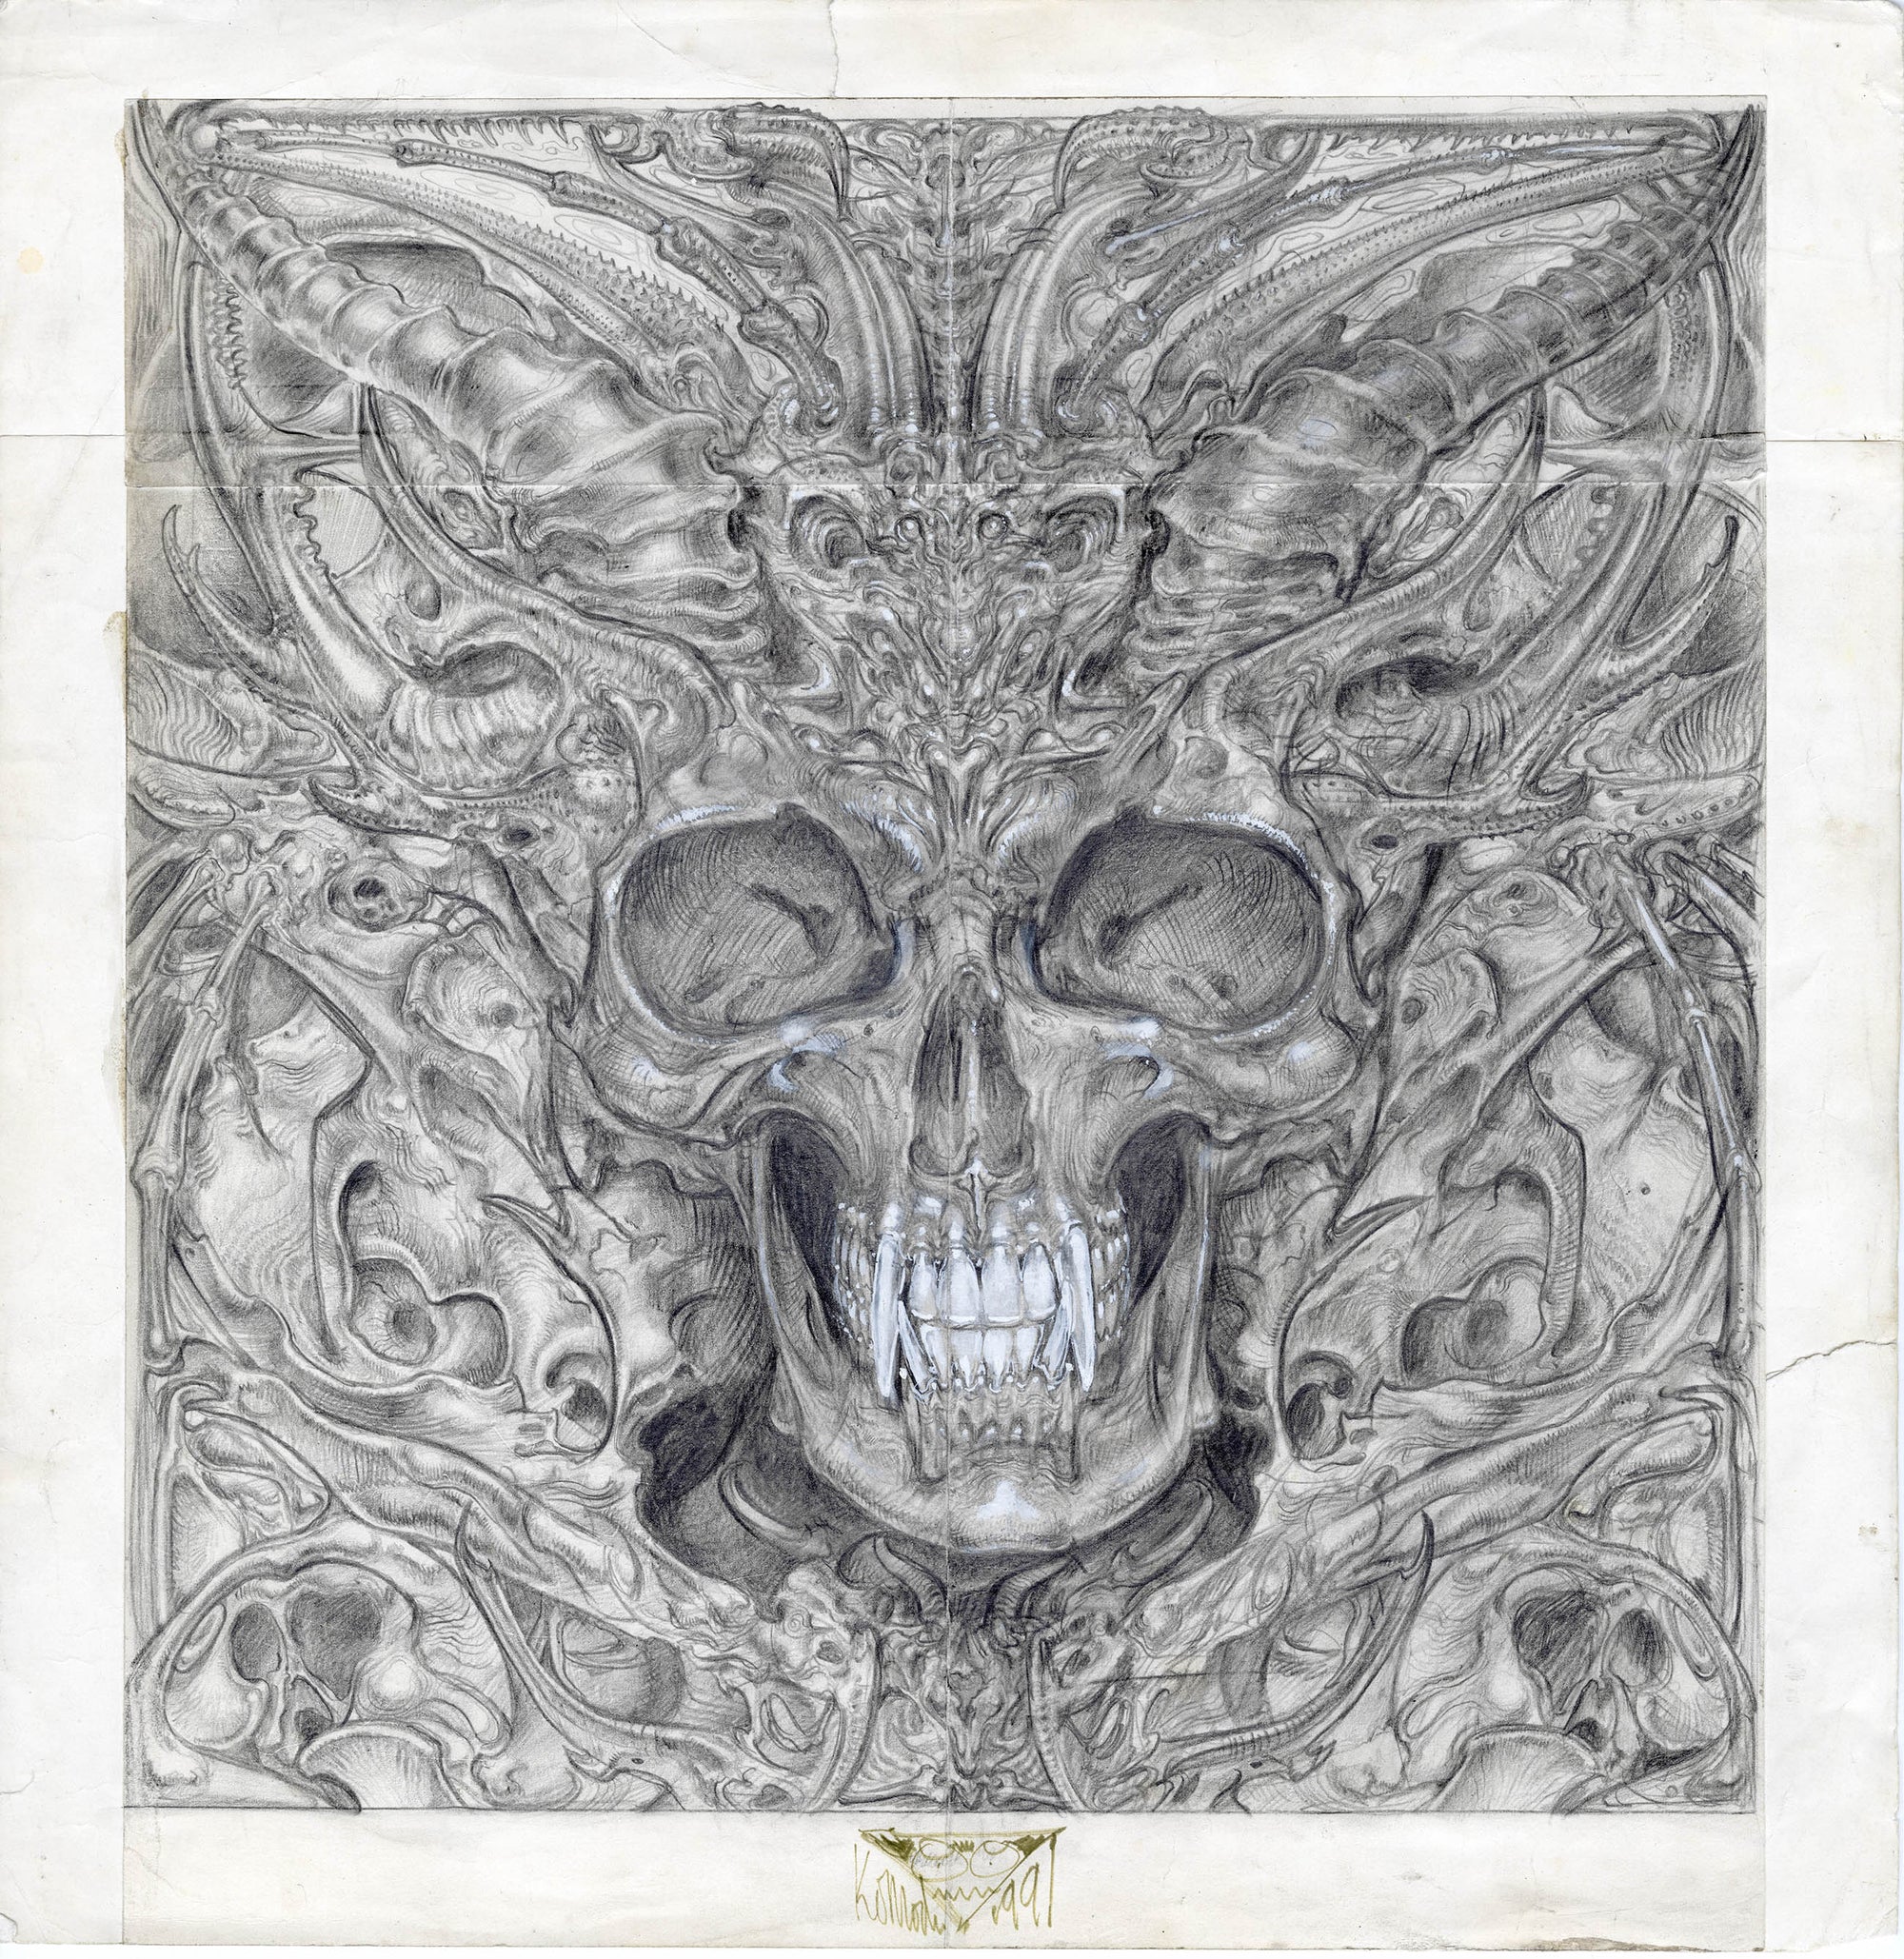 Paul Komoda ORIGINAl "Design Art for Horned Skull Wall Mounted Sculpture" c. 1991